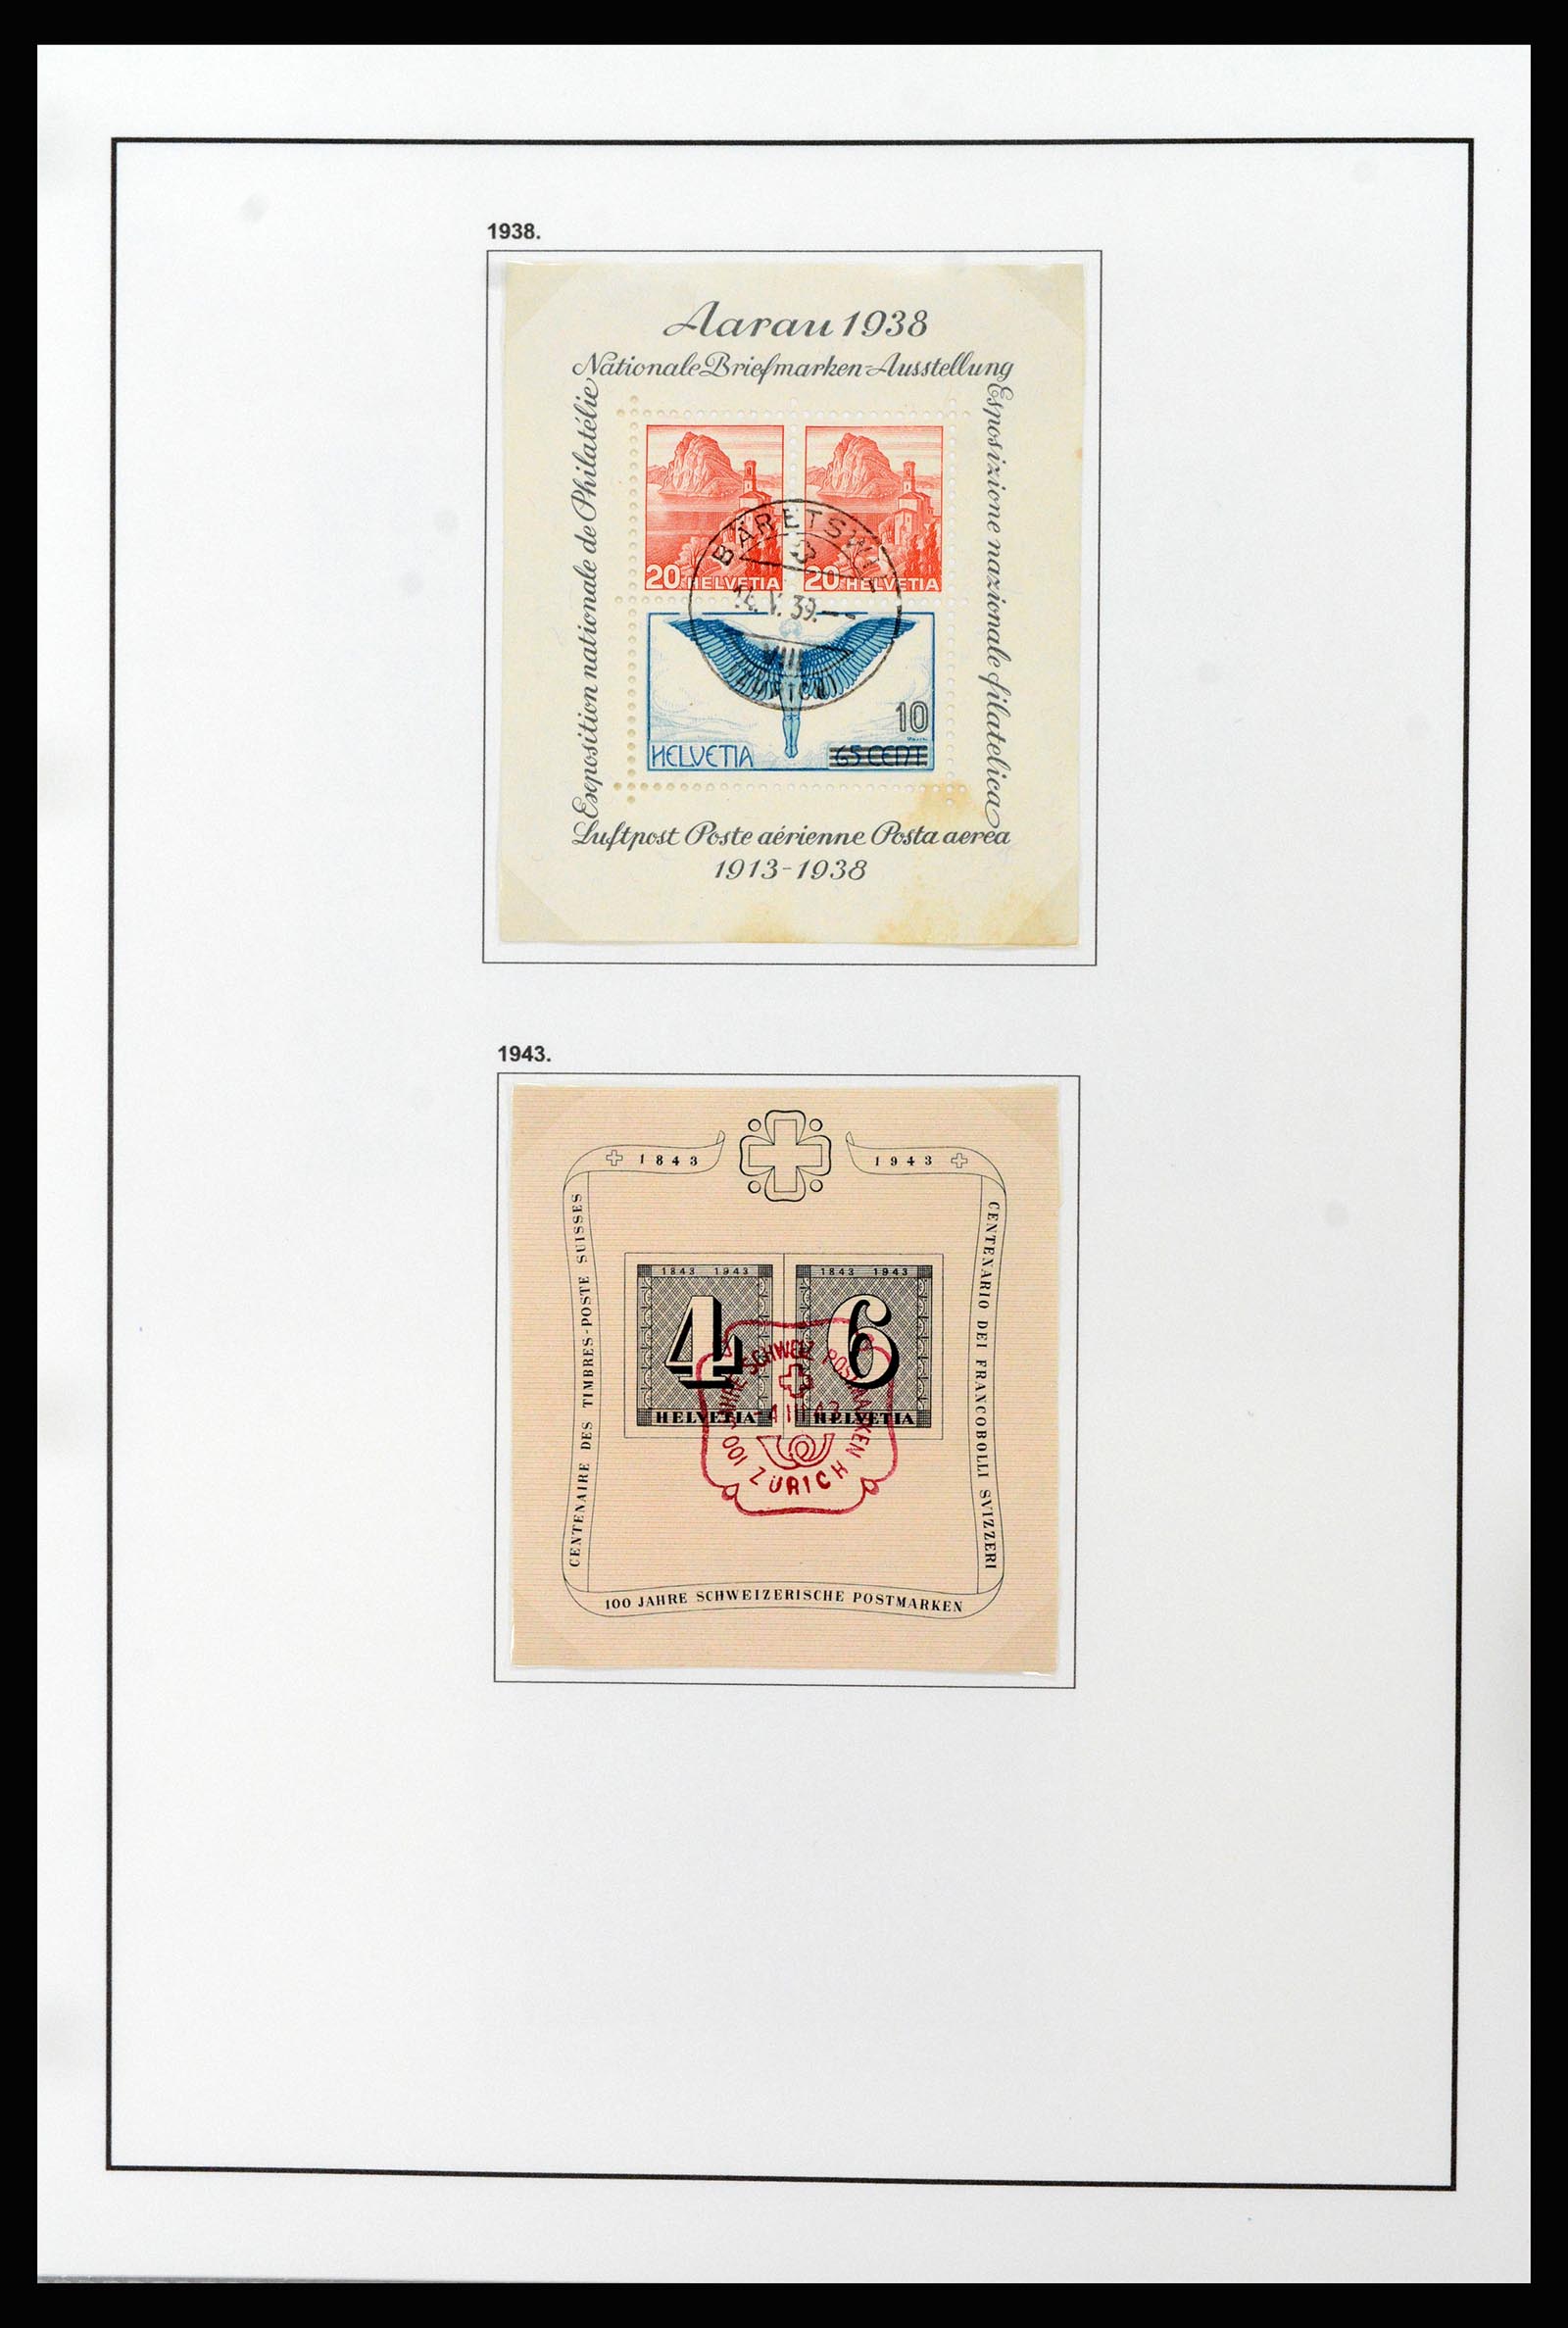 37225 100 - Stamp collection 37225 Switzerland 1854-2020.